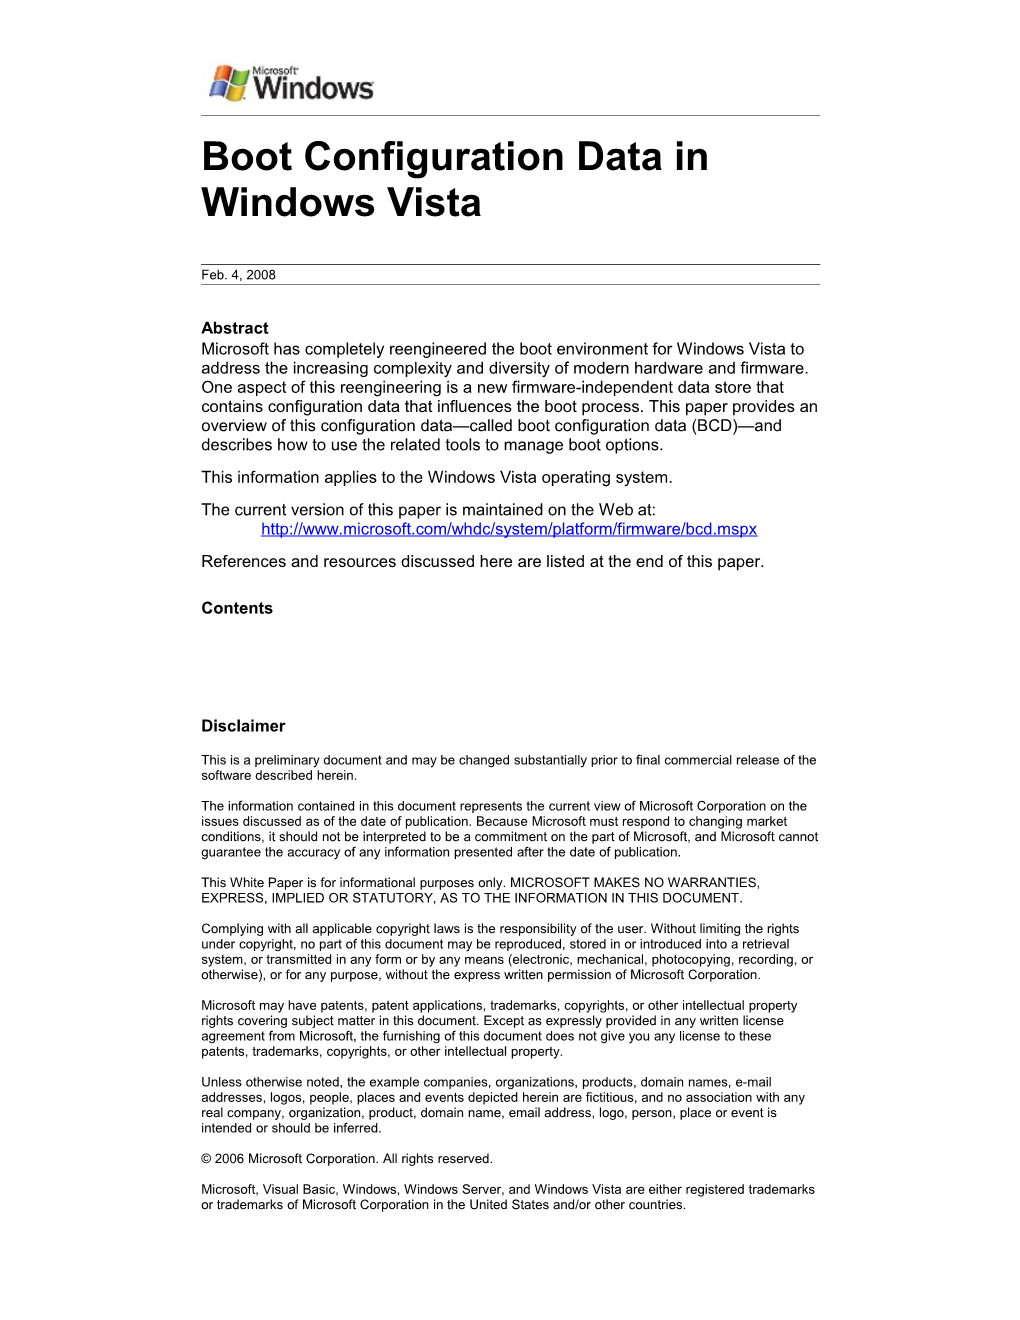 Boot Configuration Data in Windows Vista